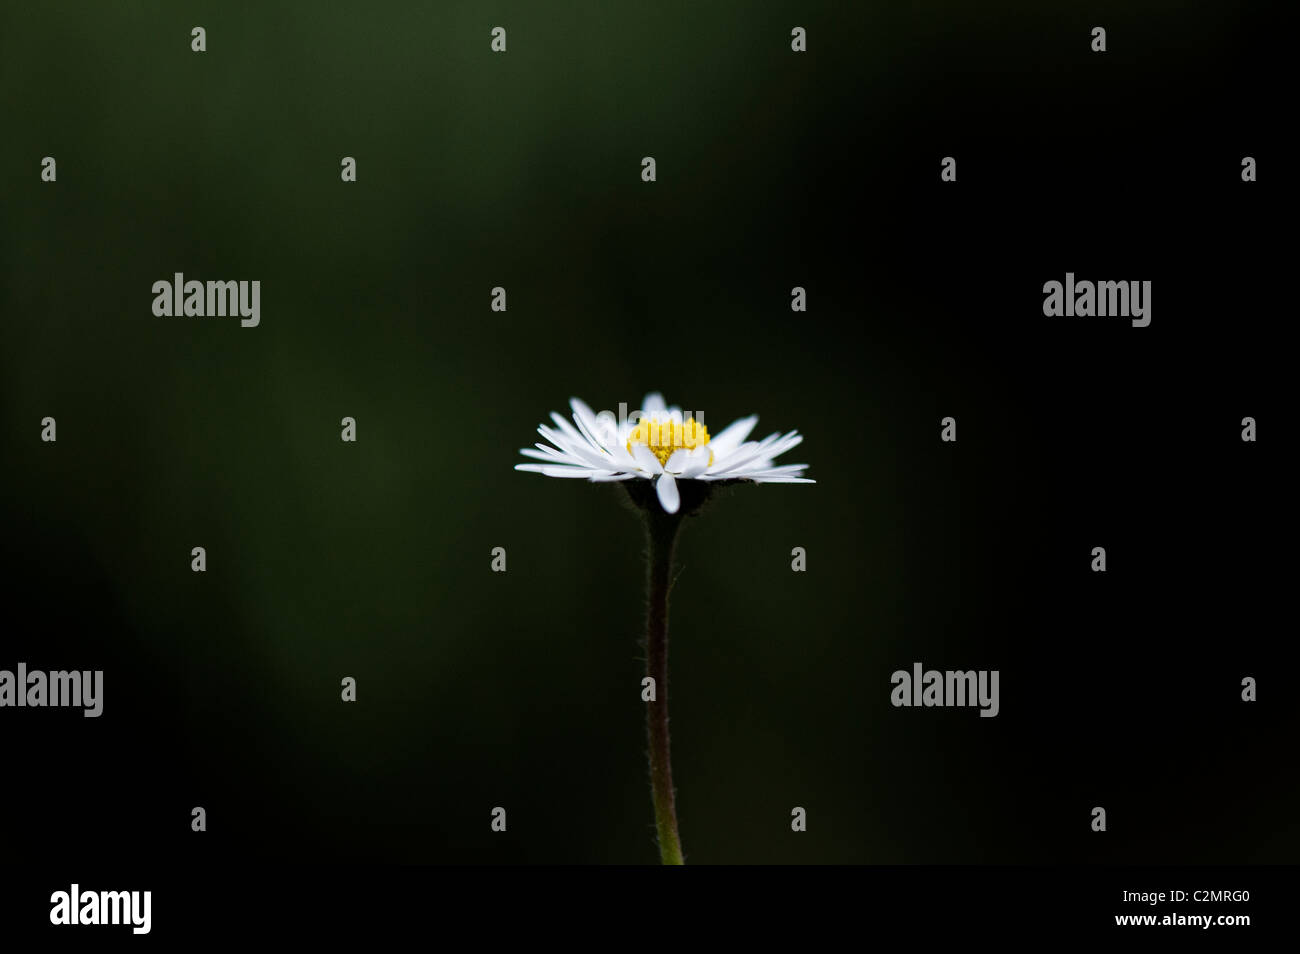 Bellis perennis. Daisy flower lit up against a dark green background Stock Photo